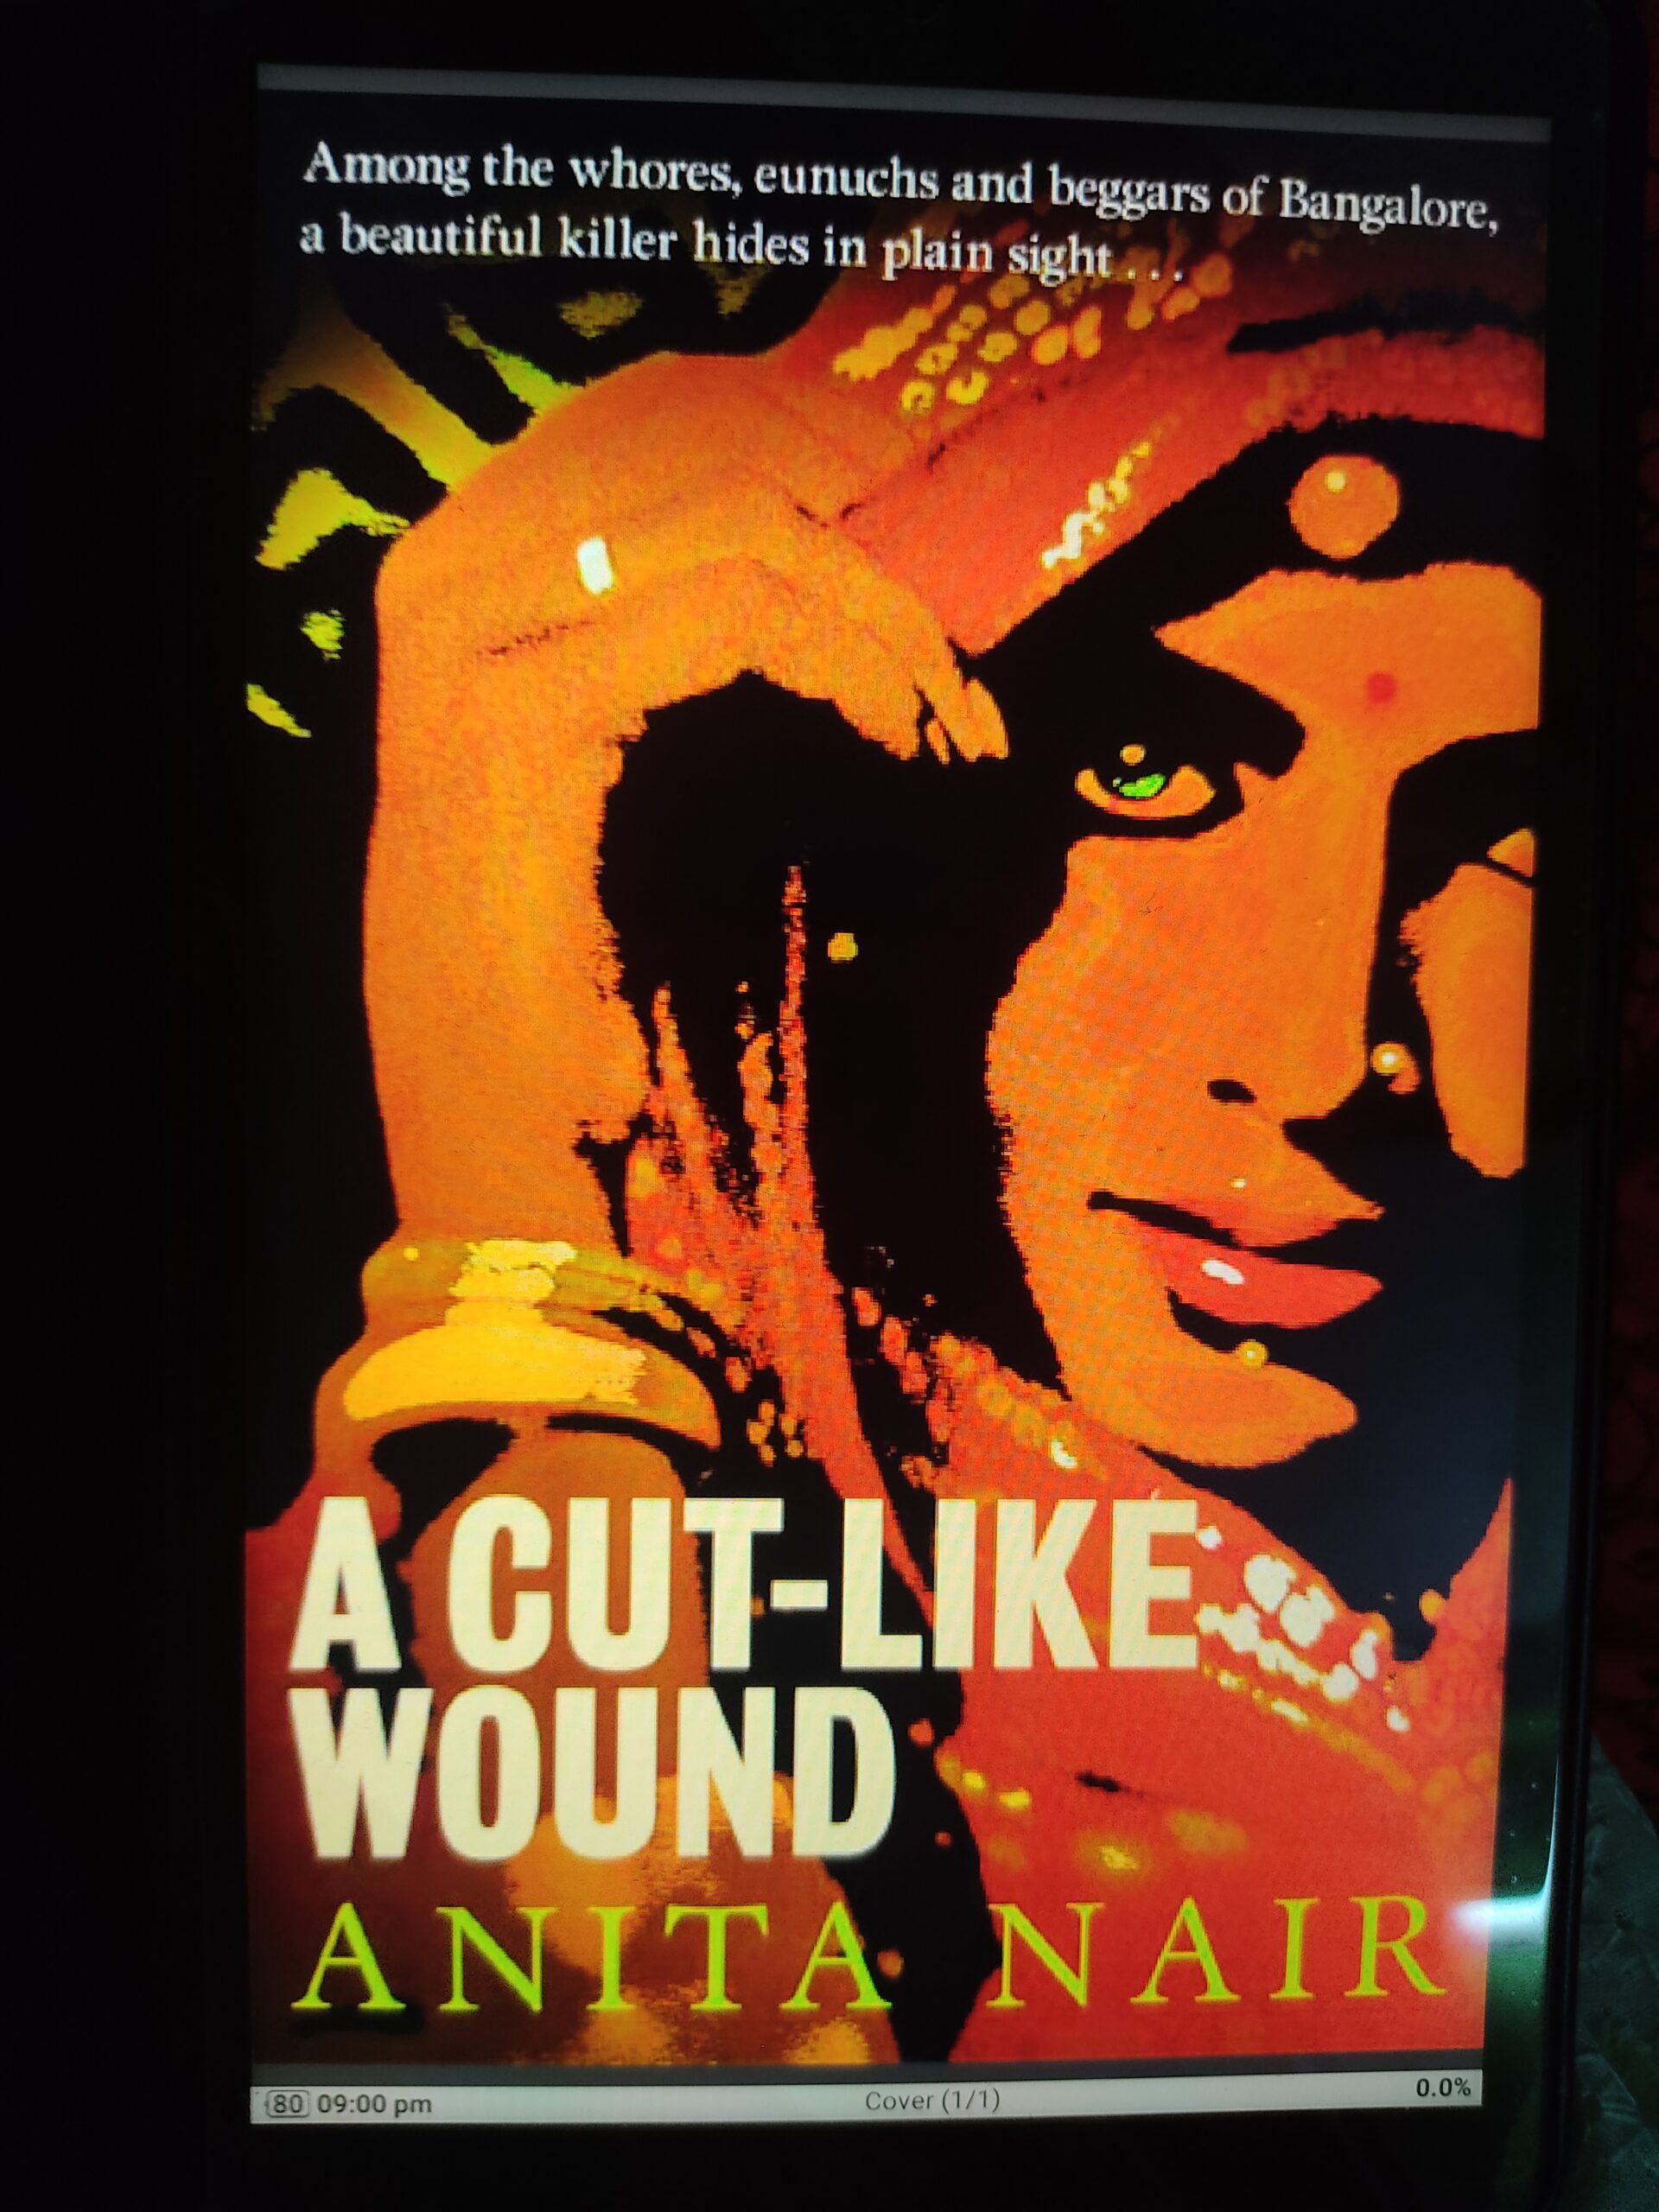 Anita Nair's Cut-Like Wound, Book Review